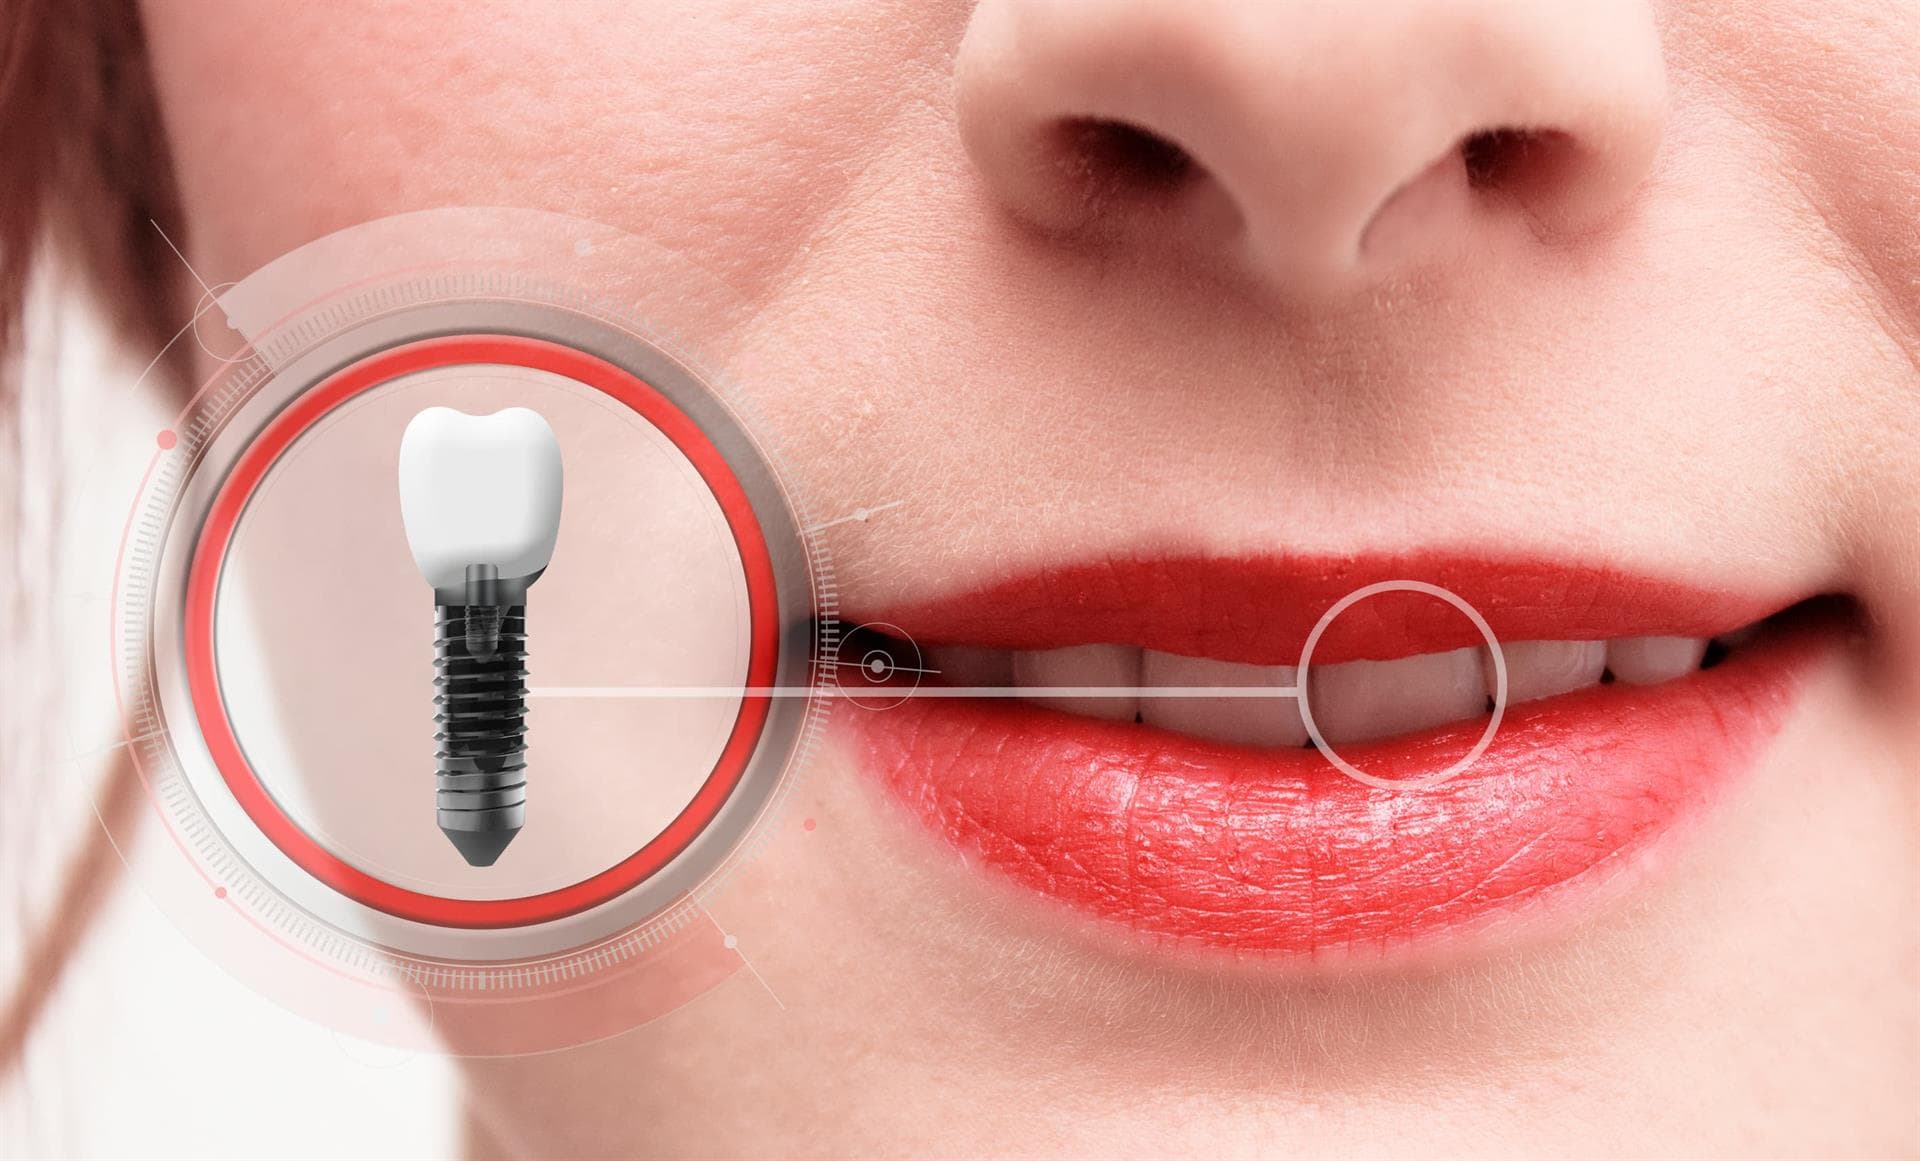 Centro Odontológico Dentine - Implantología